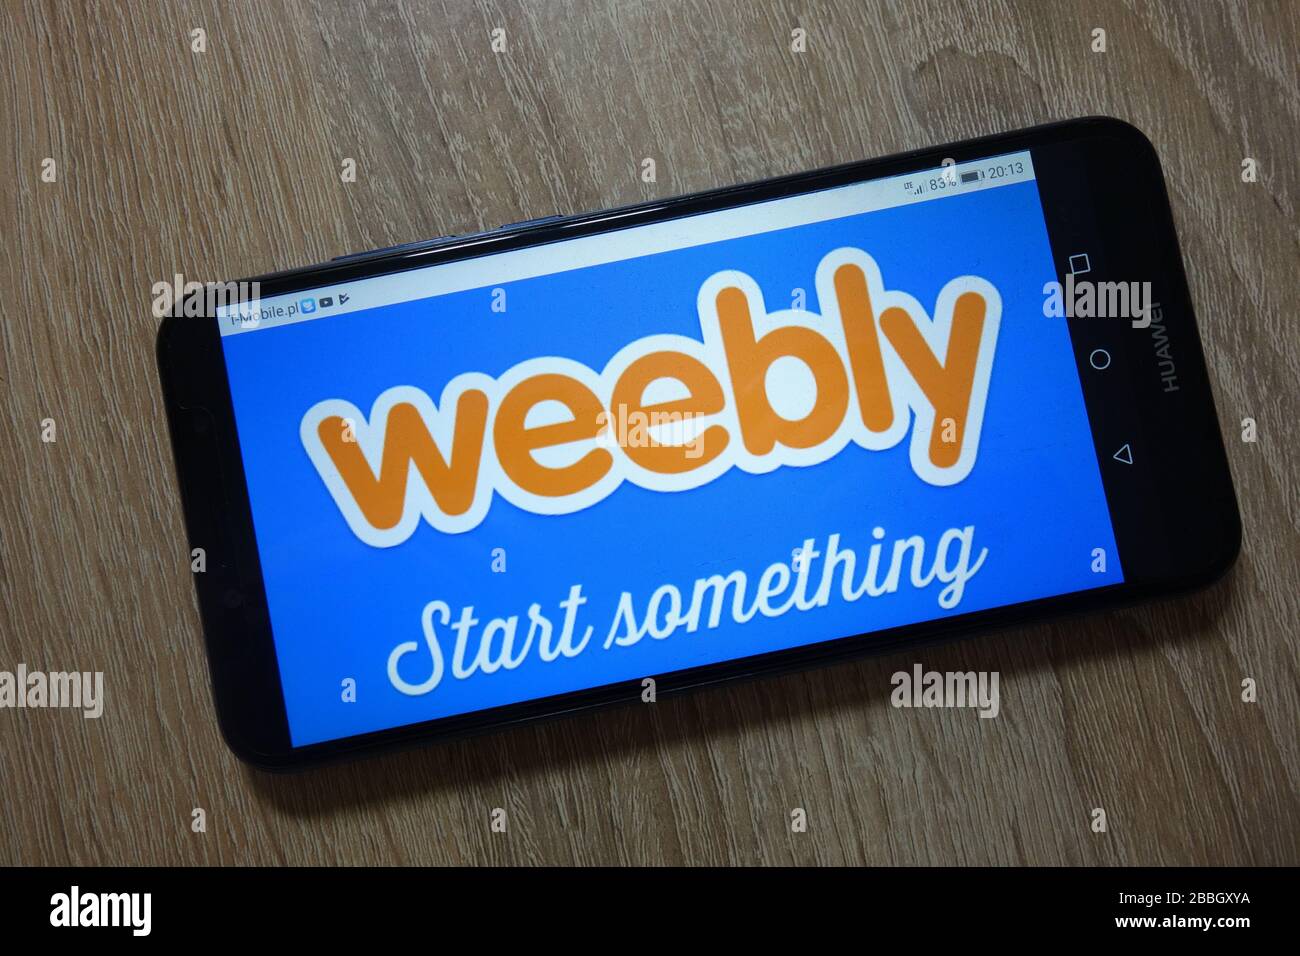 Weebly logo displayed on smartphone Stock Photo